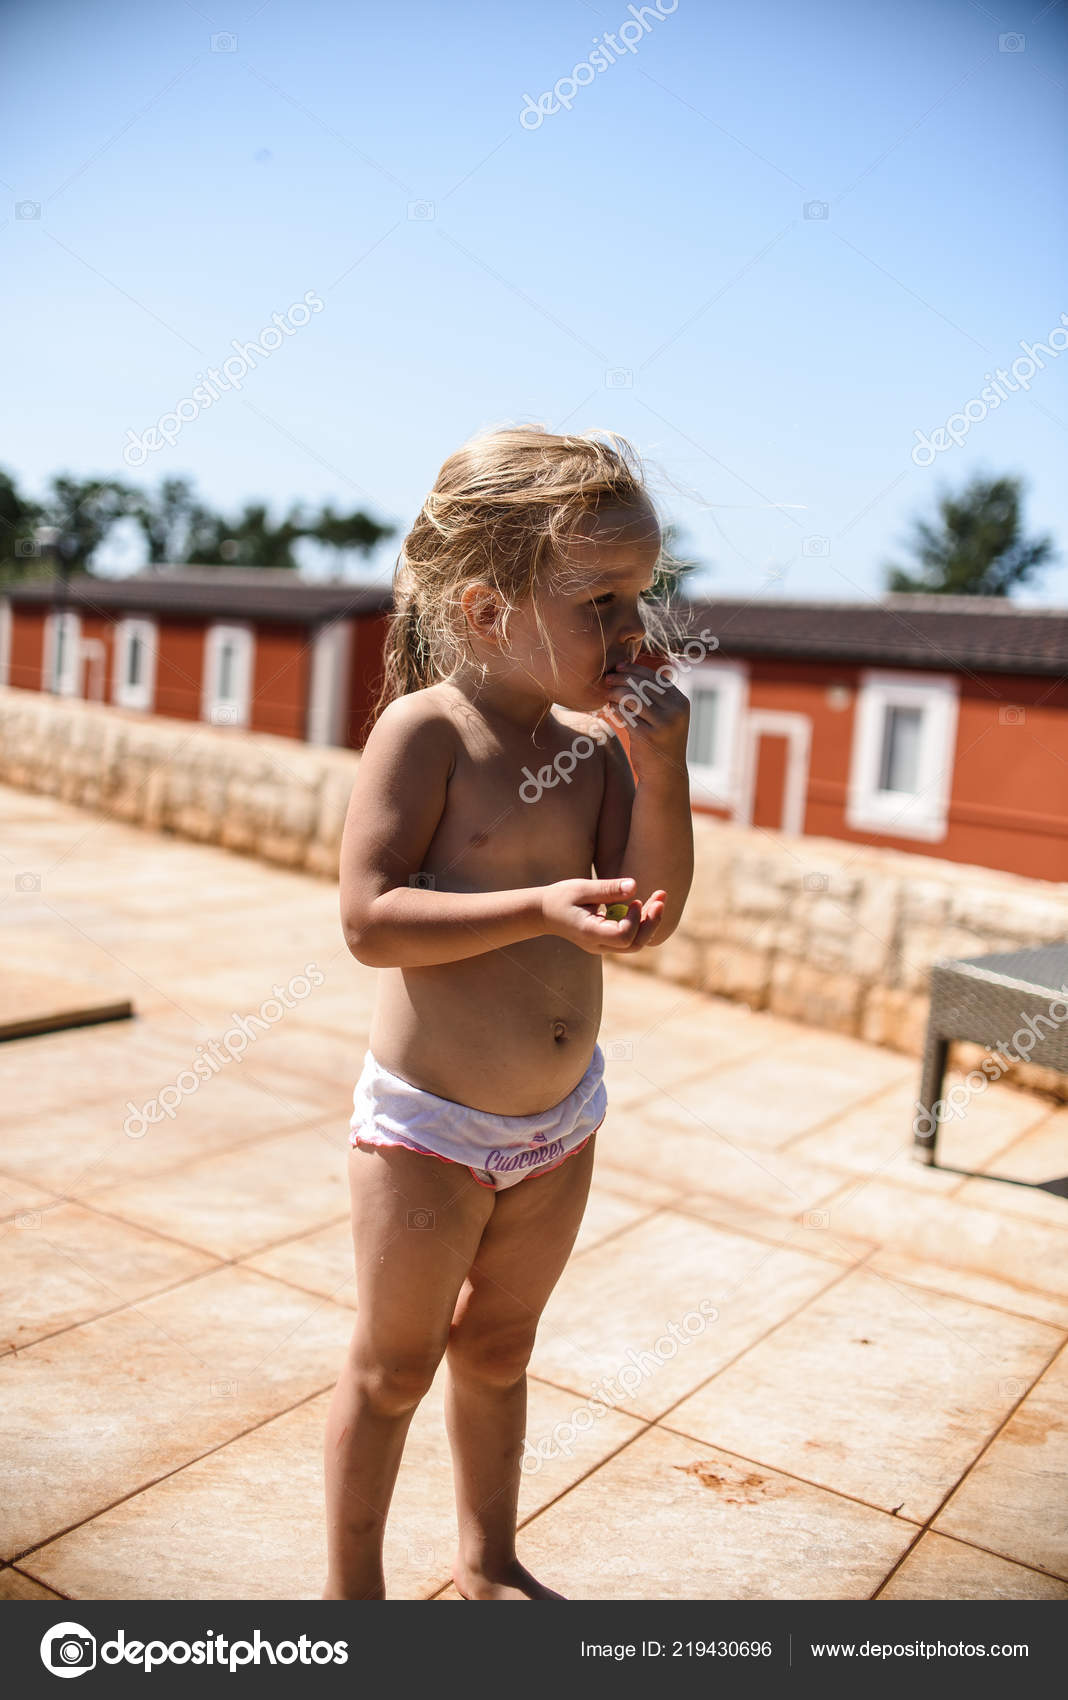 chacara florata: meninas lindas se divertindo muito na piscina